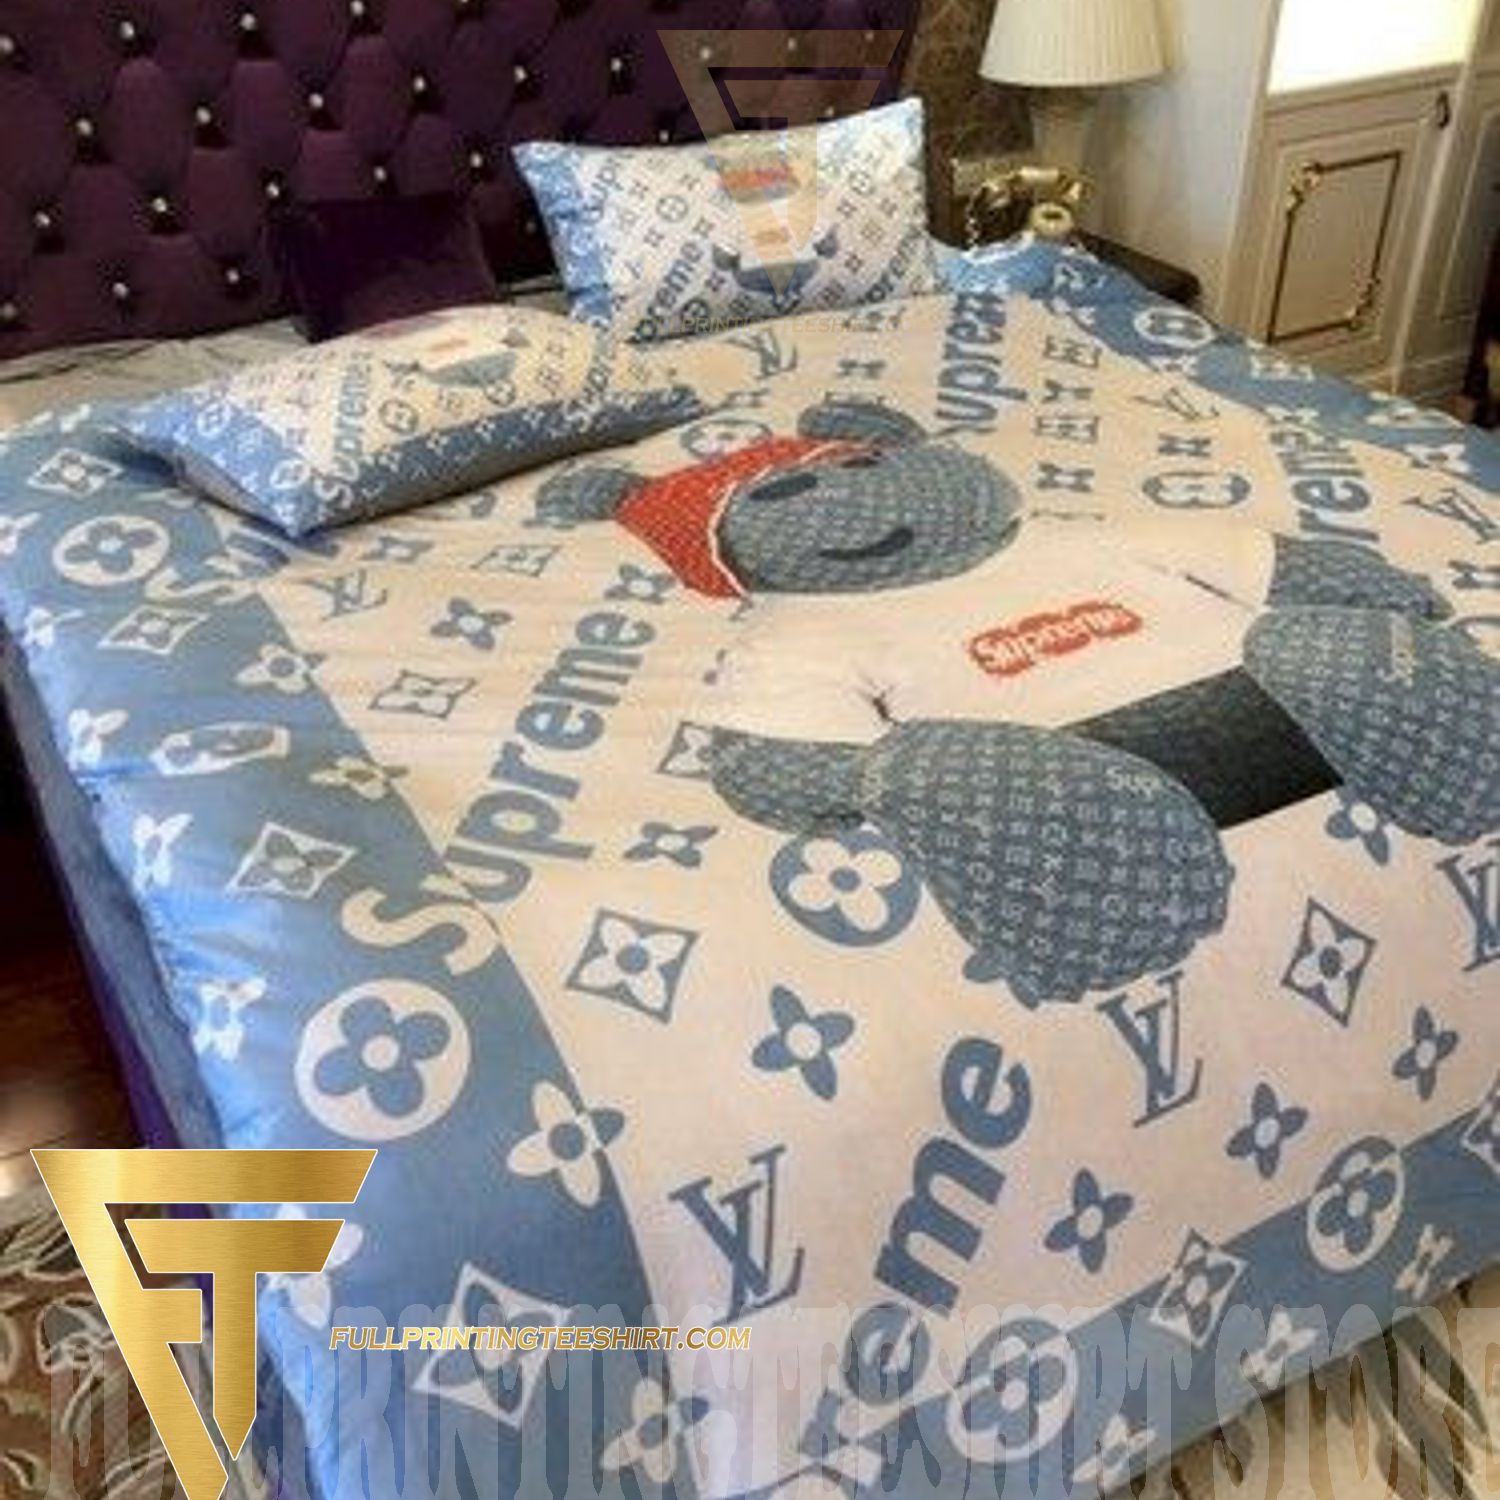 The Best Luxury Lv Supreme 05 Luxury Brand Home Decor Duvet Cover Bedroom  Sets